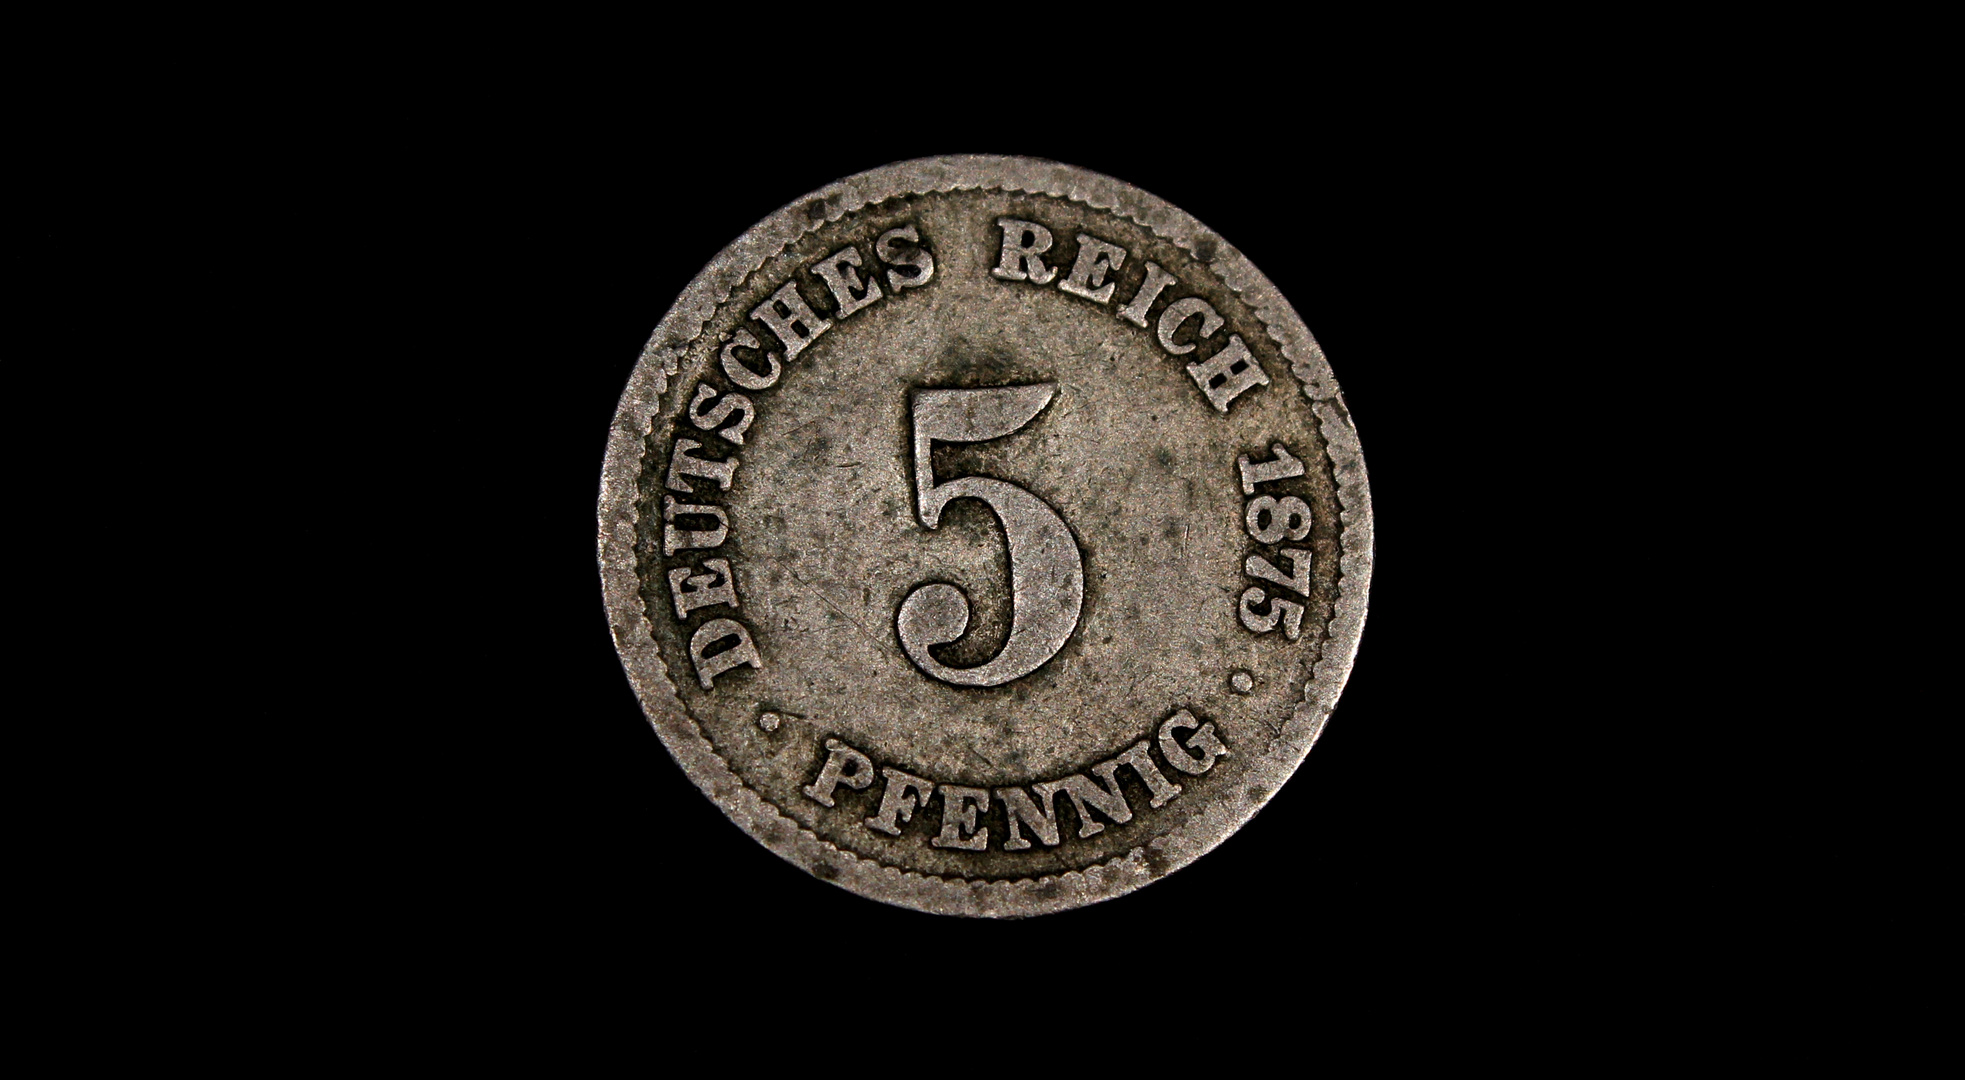 5 Pfenning (1875)